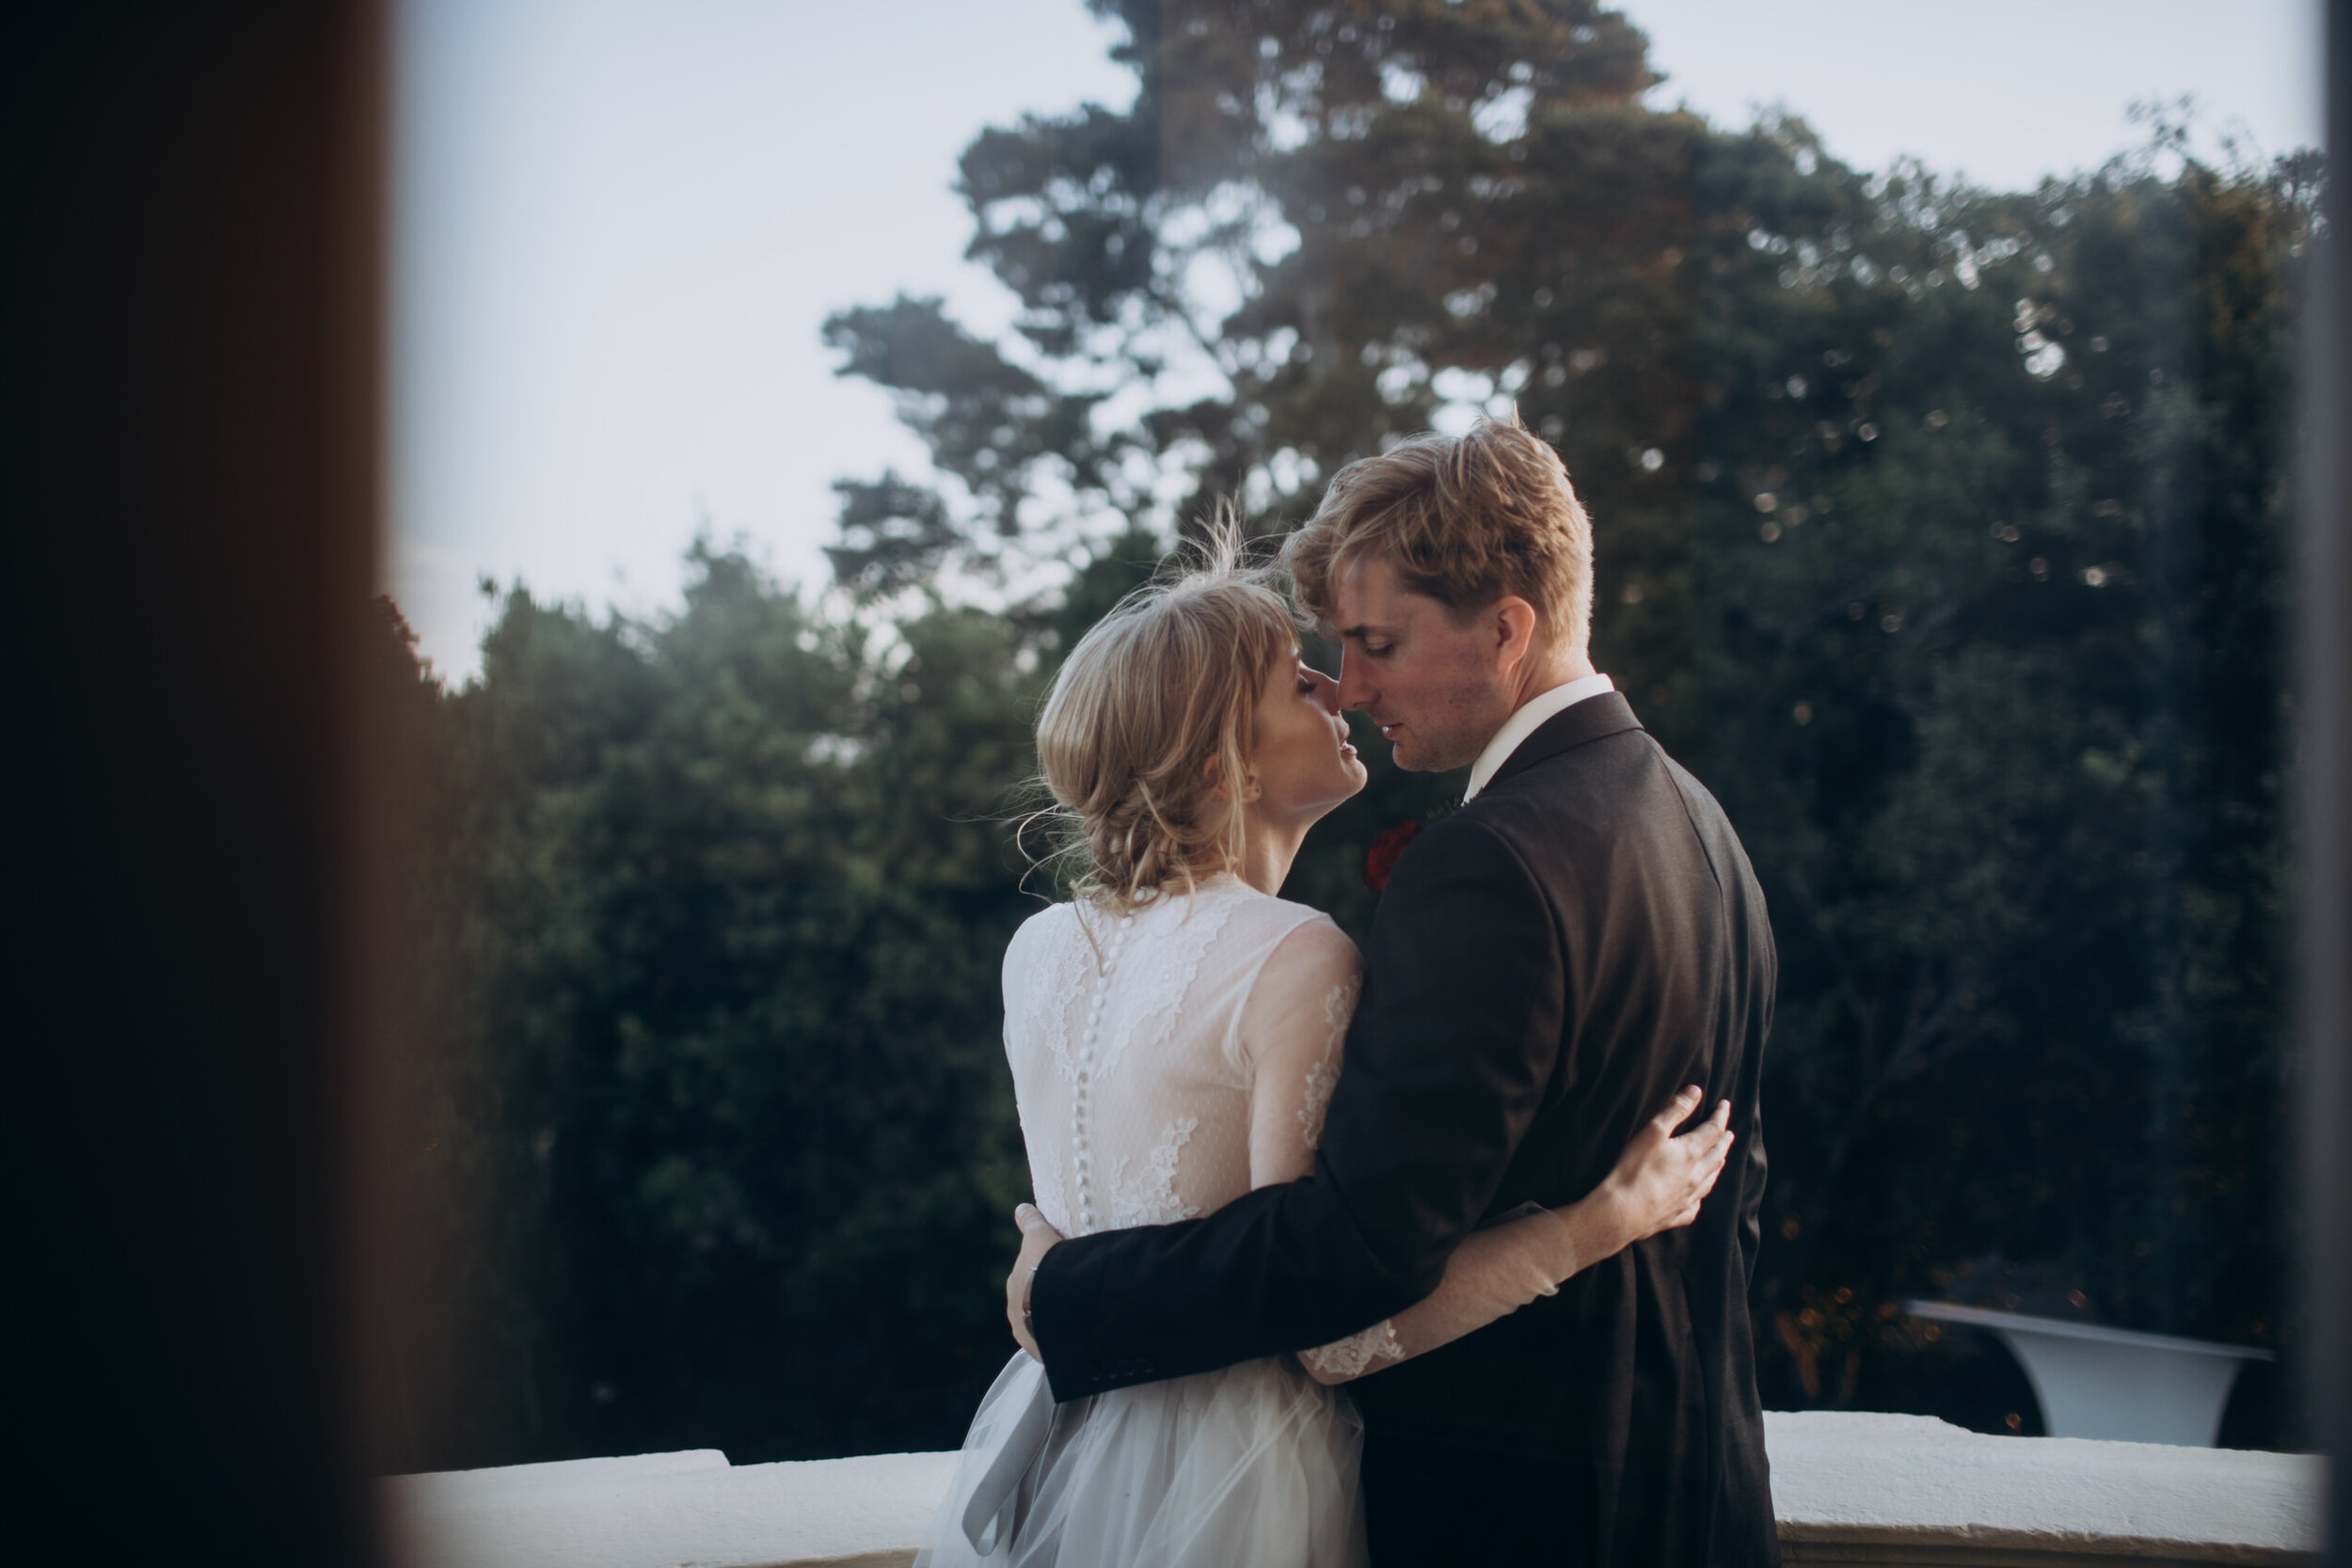 Christian wedding | The Pah Homestead | TSB Bank Wallace Arts Centre | Monte Cecilia Park | Auckland wedding | New Zealand wedding photographer | Small intimate wedding 